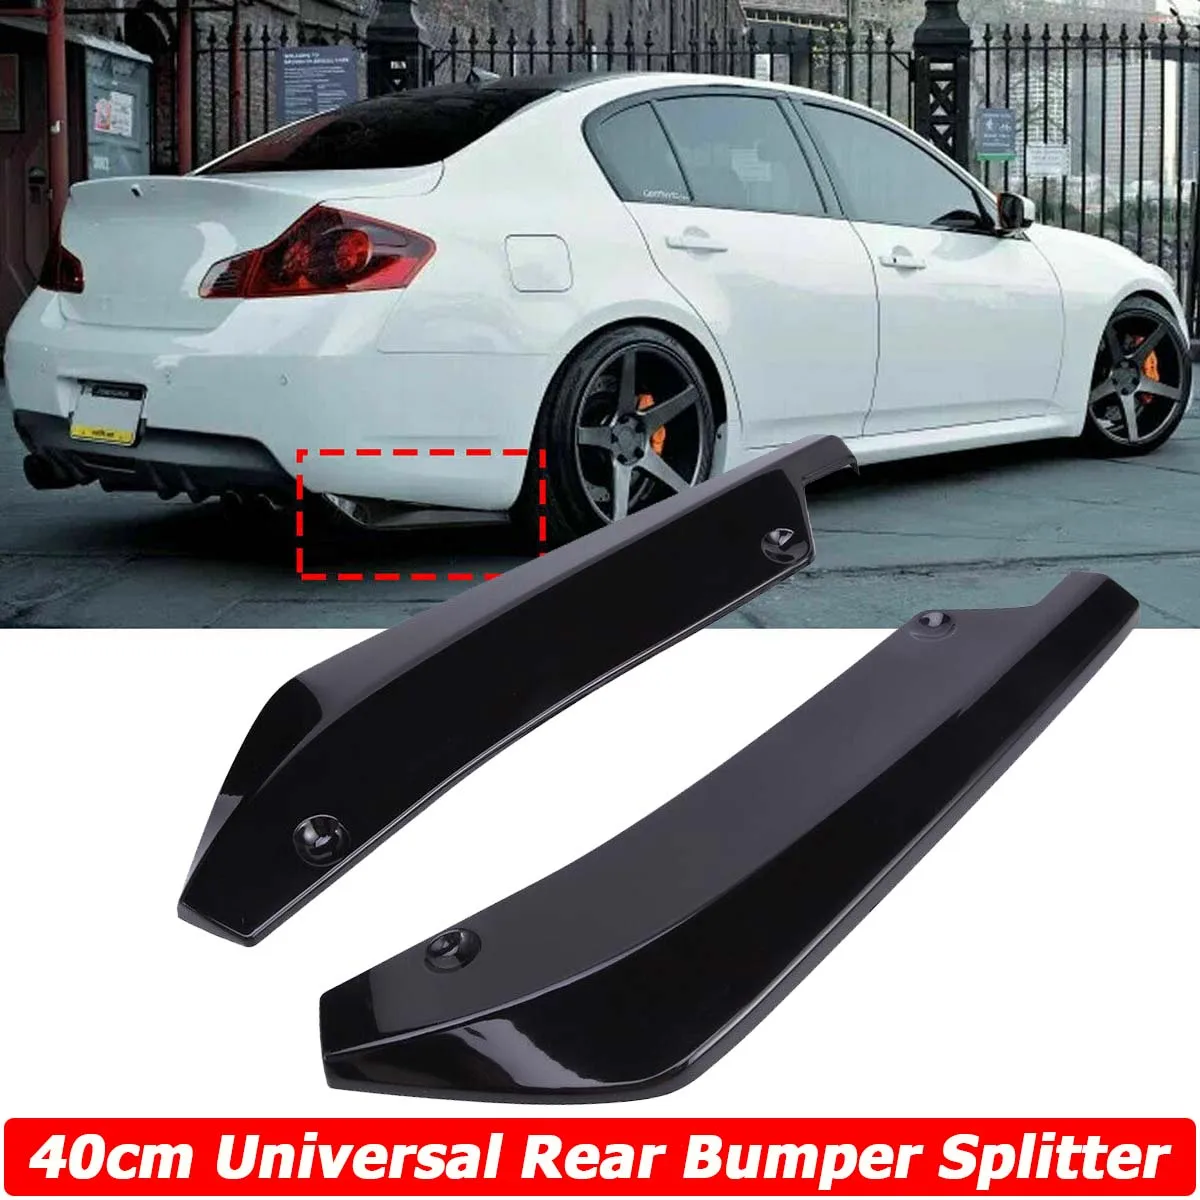 Rear Bumper Diffuser Splitter Cover Side Canards Lips Trim Sticker Universa For Infiniti G35 G37 Q50 Q60 Q70 G25 Car Accessories